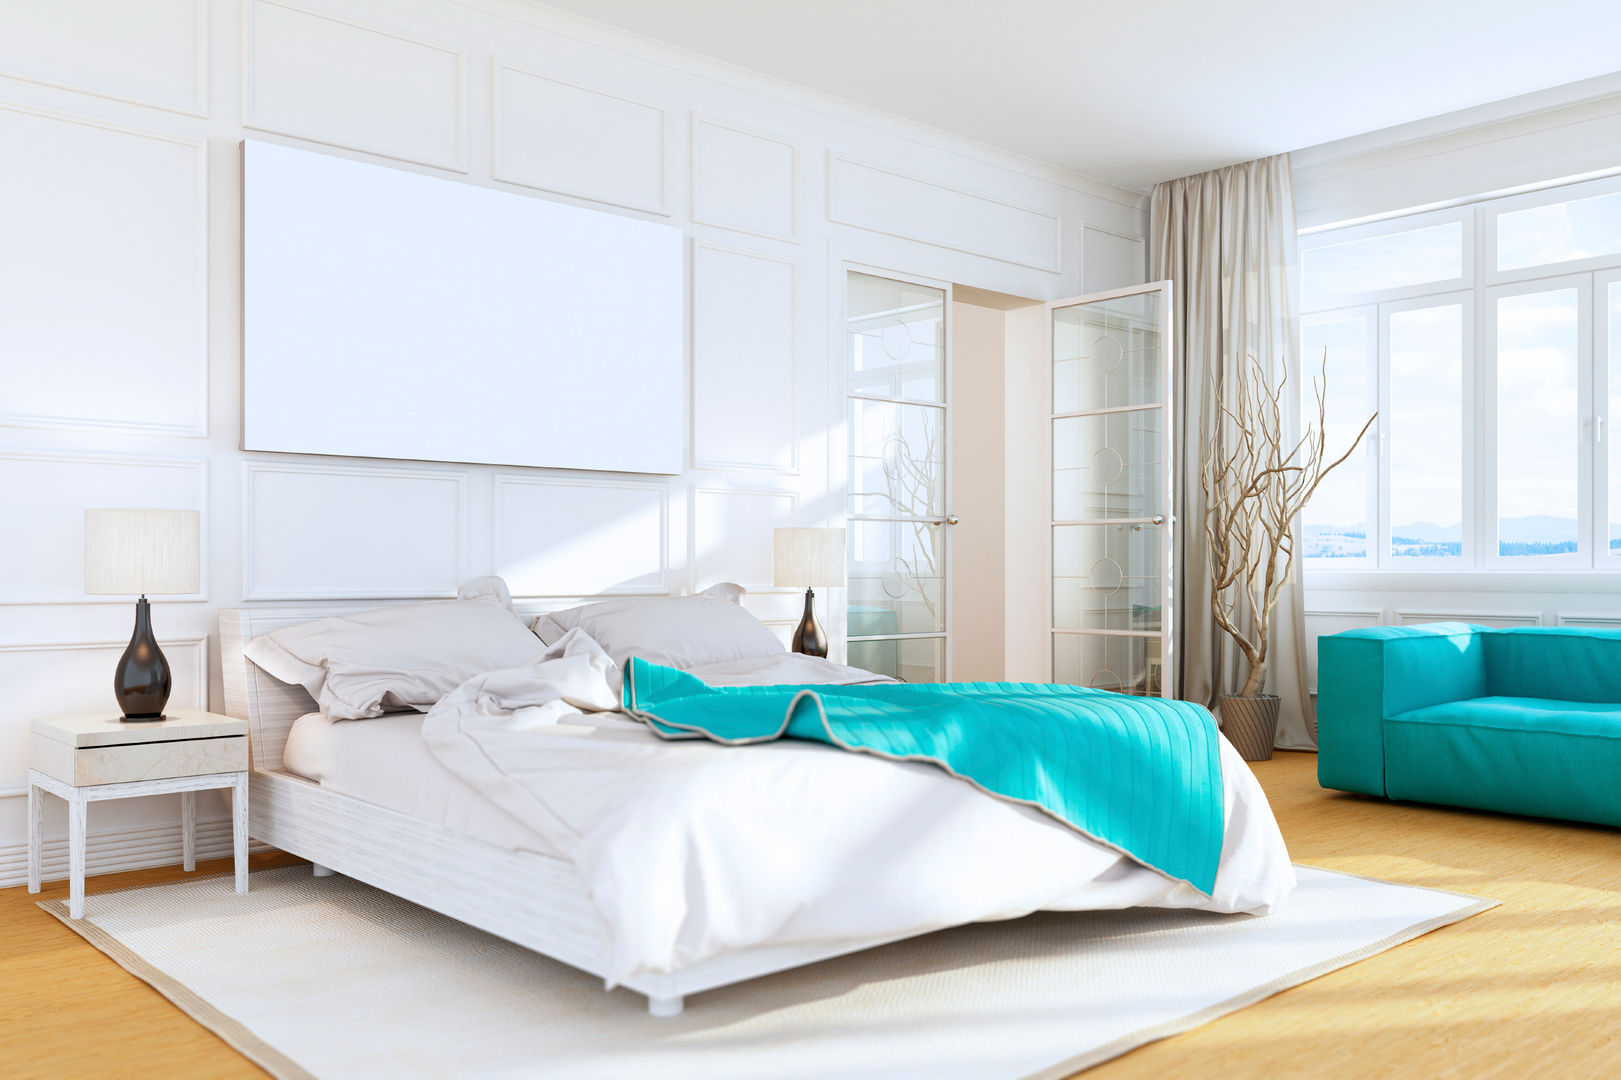 Beach House Bedroom Gracious Luxury Interiors Cuartos de estilo minimalista Torquoise,Blue,beach house,White,Bright,Pastel,Minimal,Pop of Color